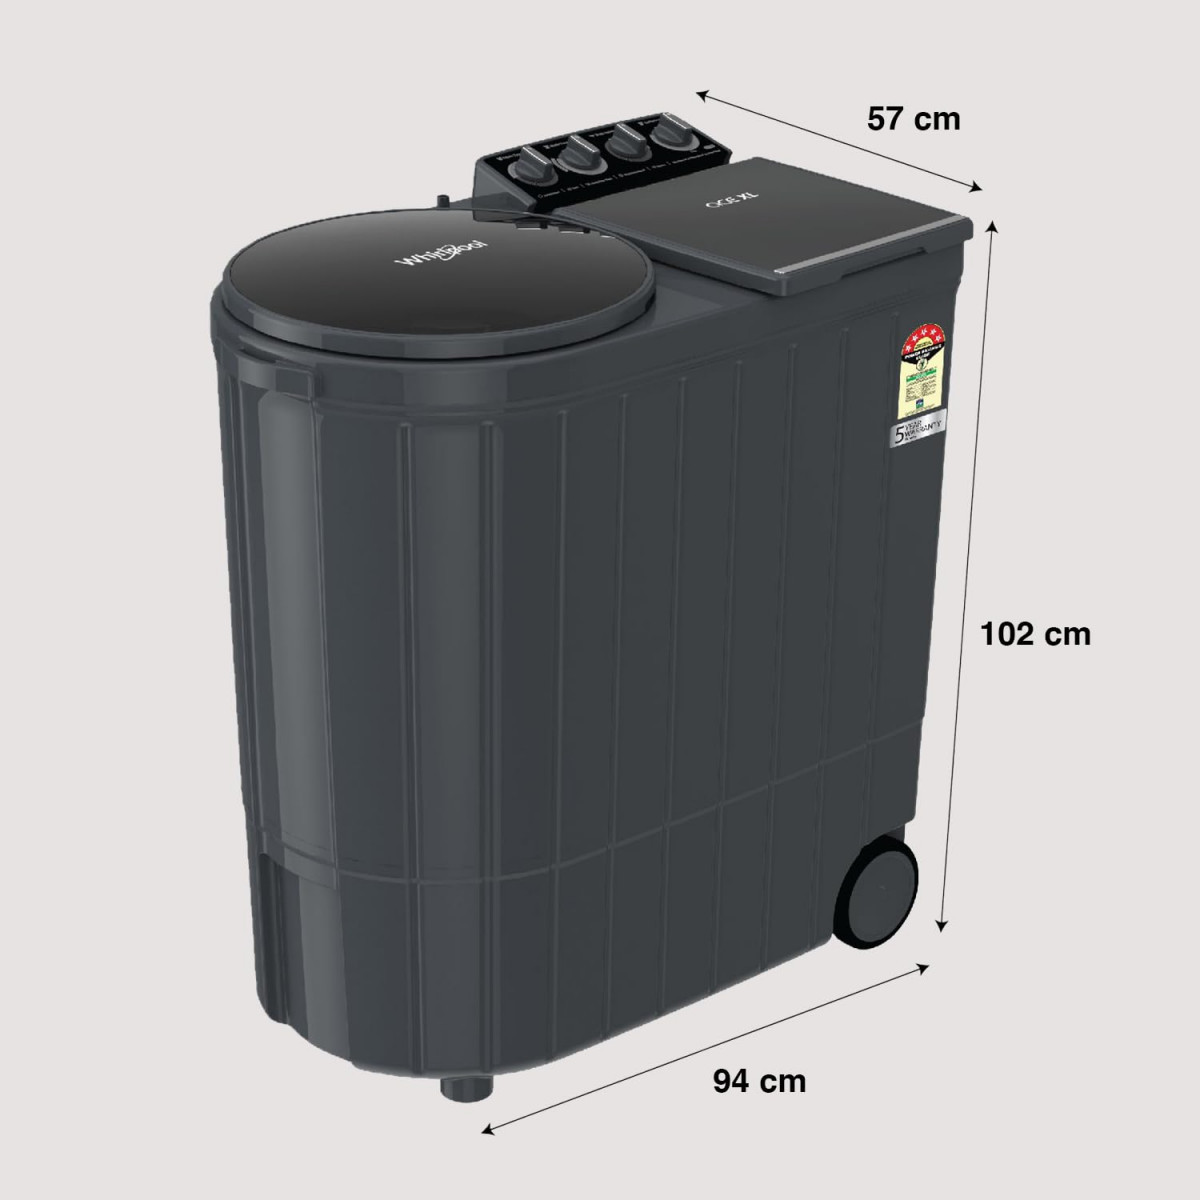 Whirlpool 11Kg Semi-Automatic Top Loading Washing Machine Ace XL 11 Graphite Grey 10YR